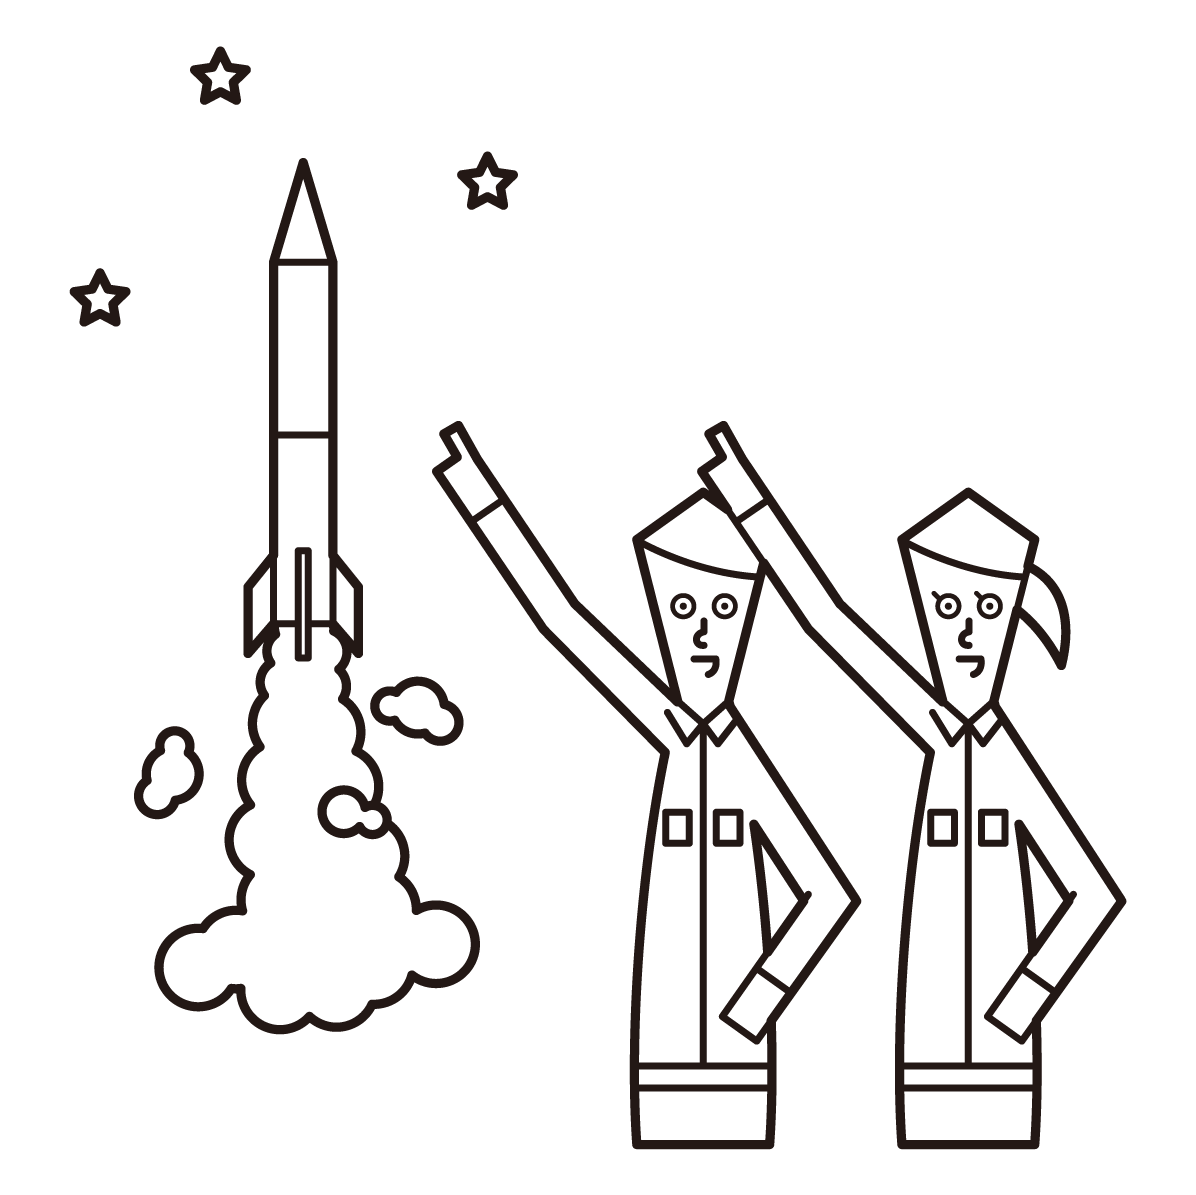 Illustration of people launching rockets